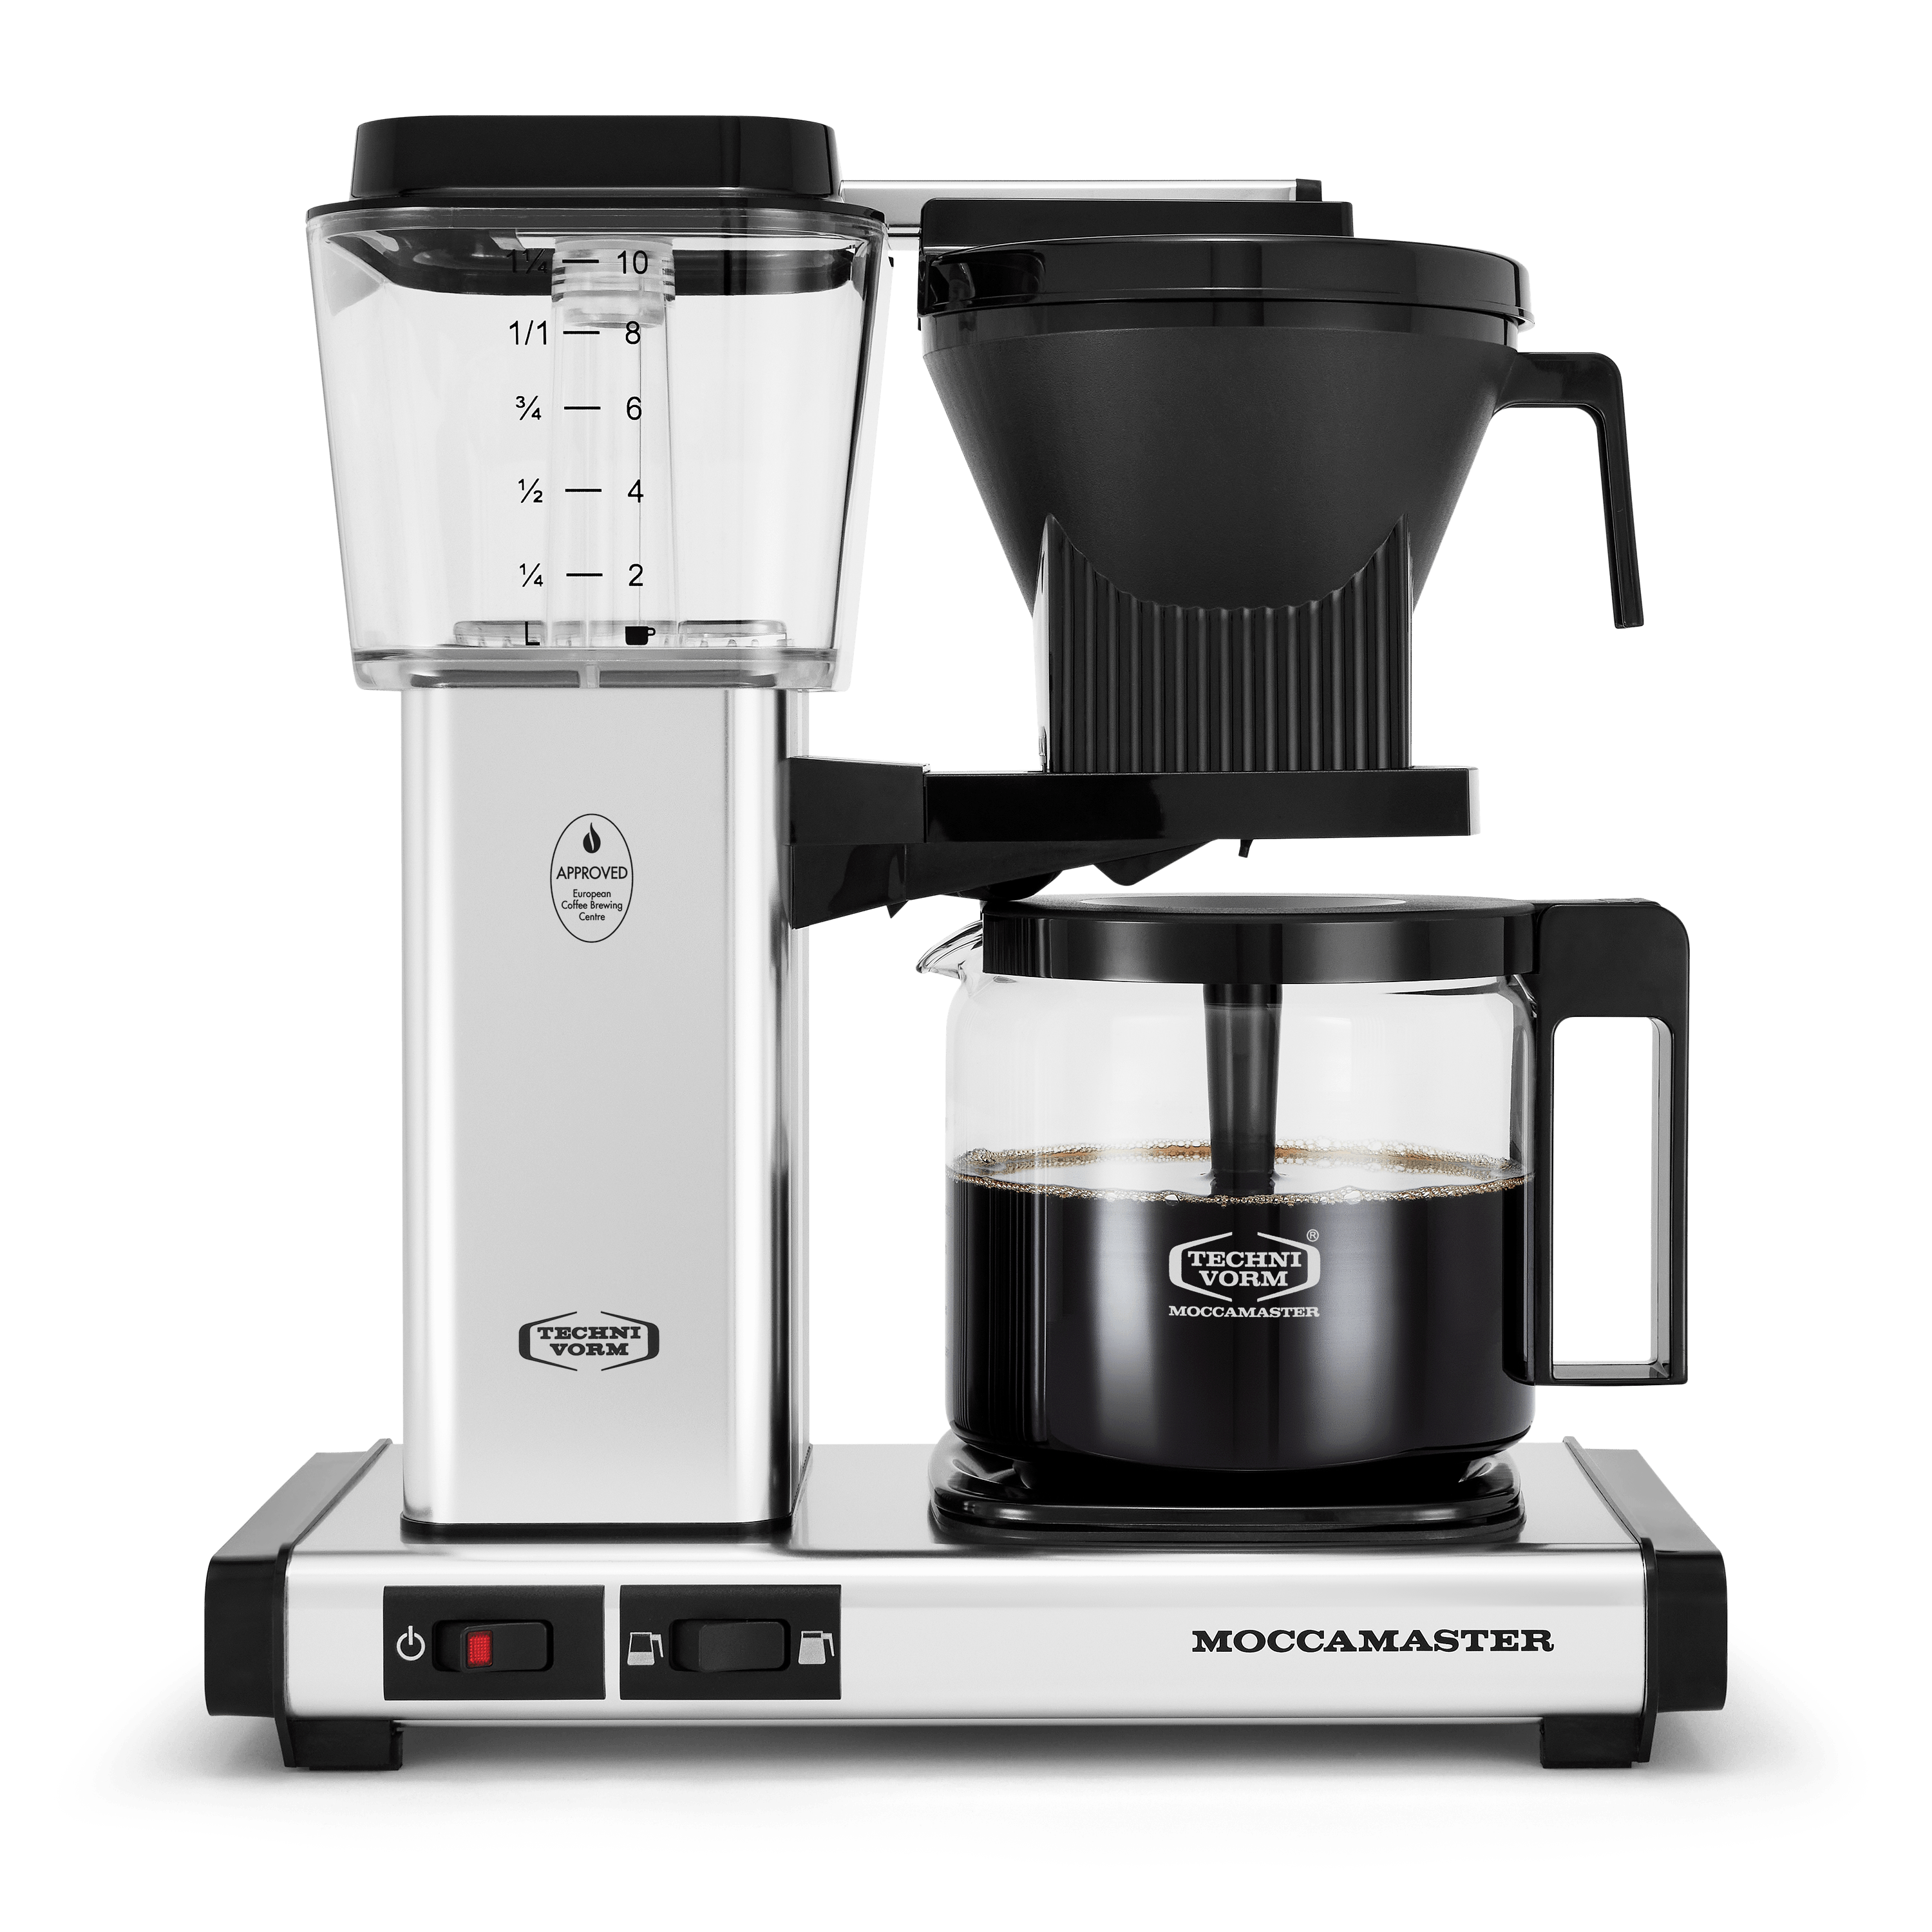 Maker KBGV USA Moccamaster Coffee Machine: - Moccamaster Automatic Select Coffee